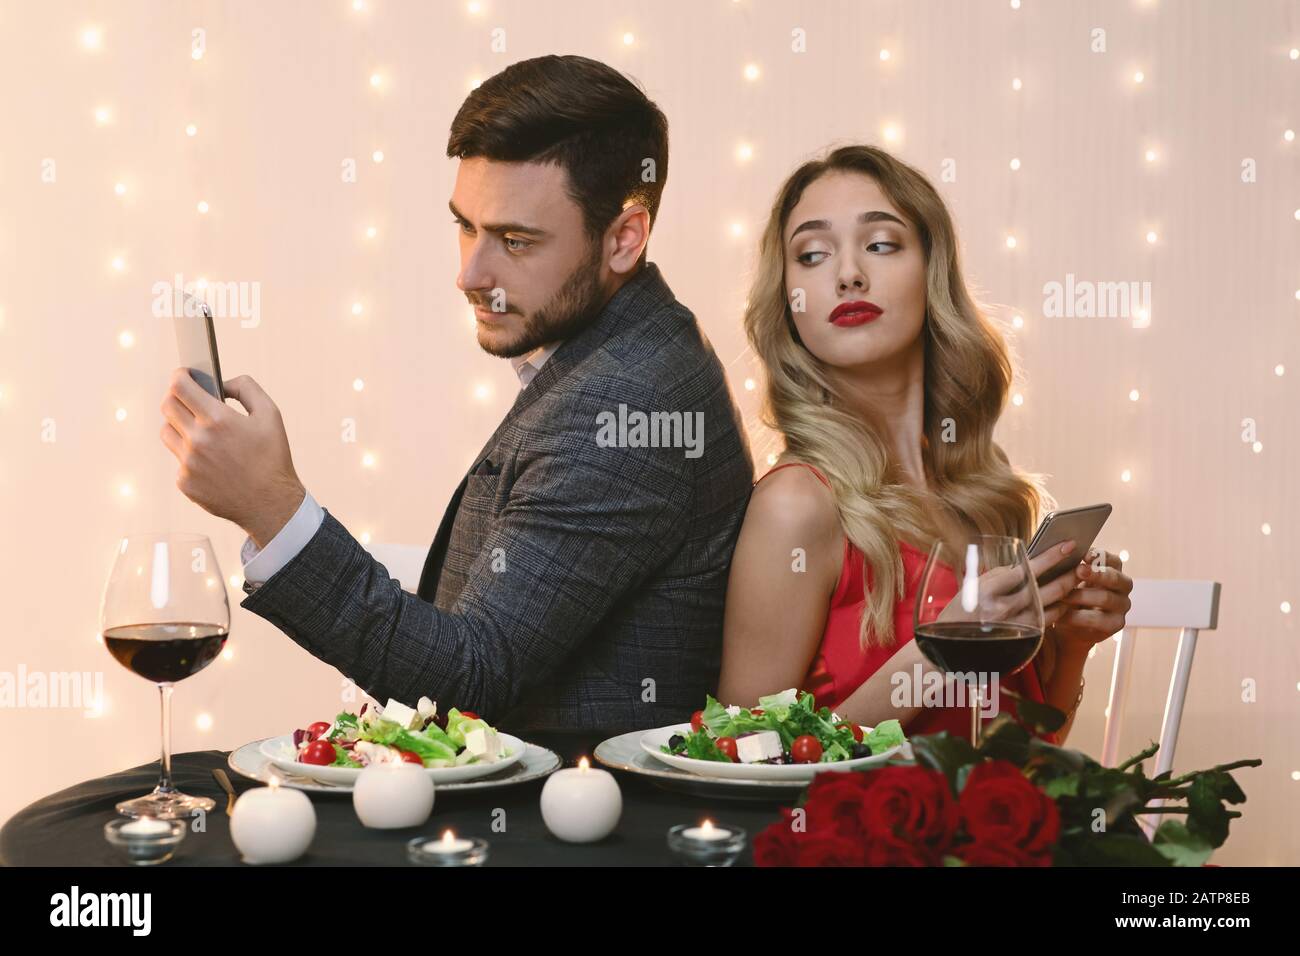 Curious Woman Peeking Into Boyfriend's Smartphone During Romantic Dinner In Restaurant Stock Photo